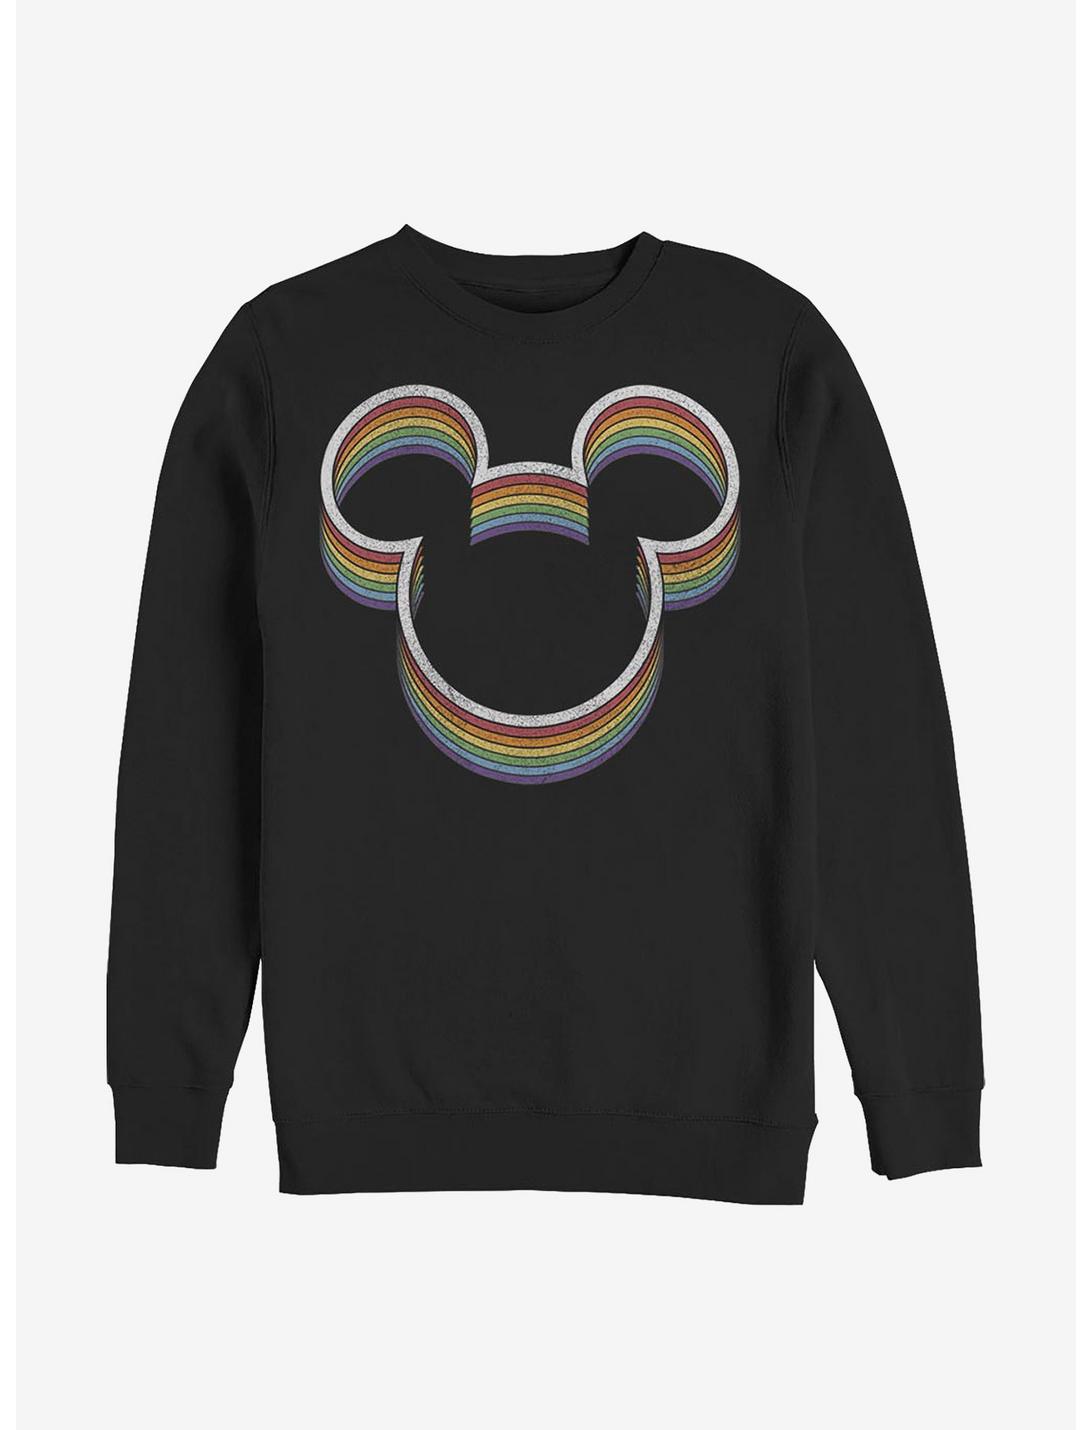 Plus Size Disney Mickey Mouse Rainbow Ears Sweatshirt, BLACK, hi-res